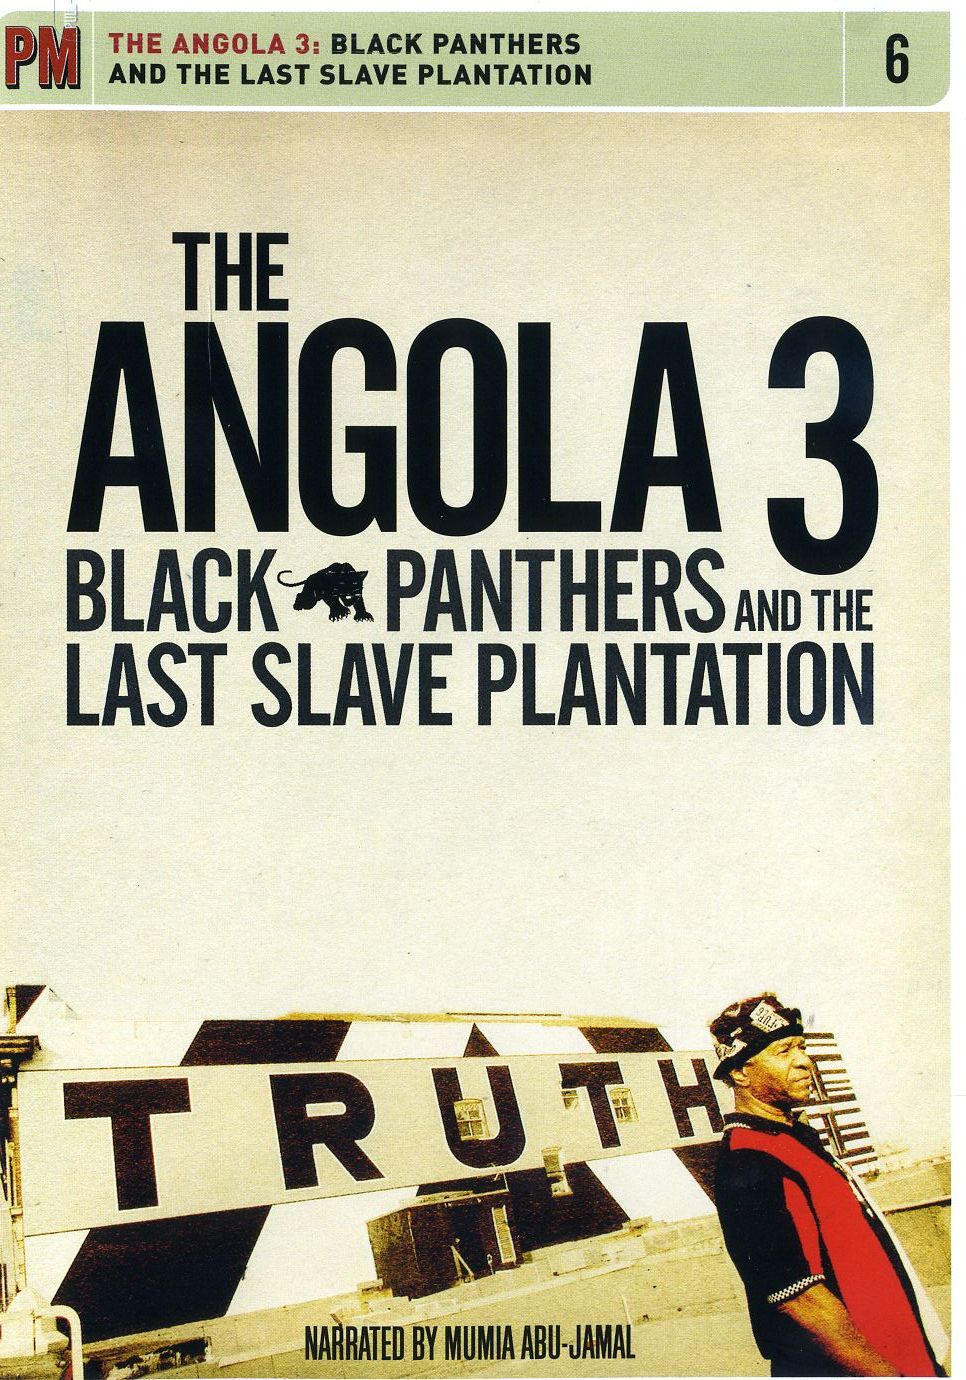 ANGOLA 3: BLACK PANTHERS & LAST SLAVE PLANTATION